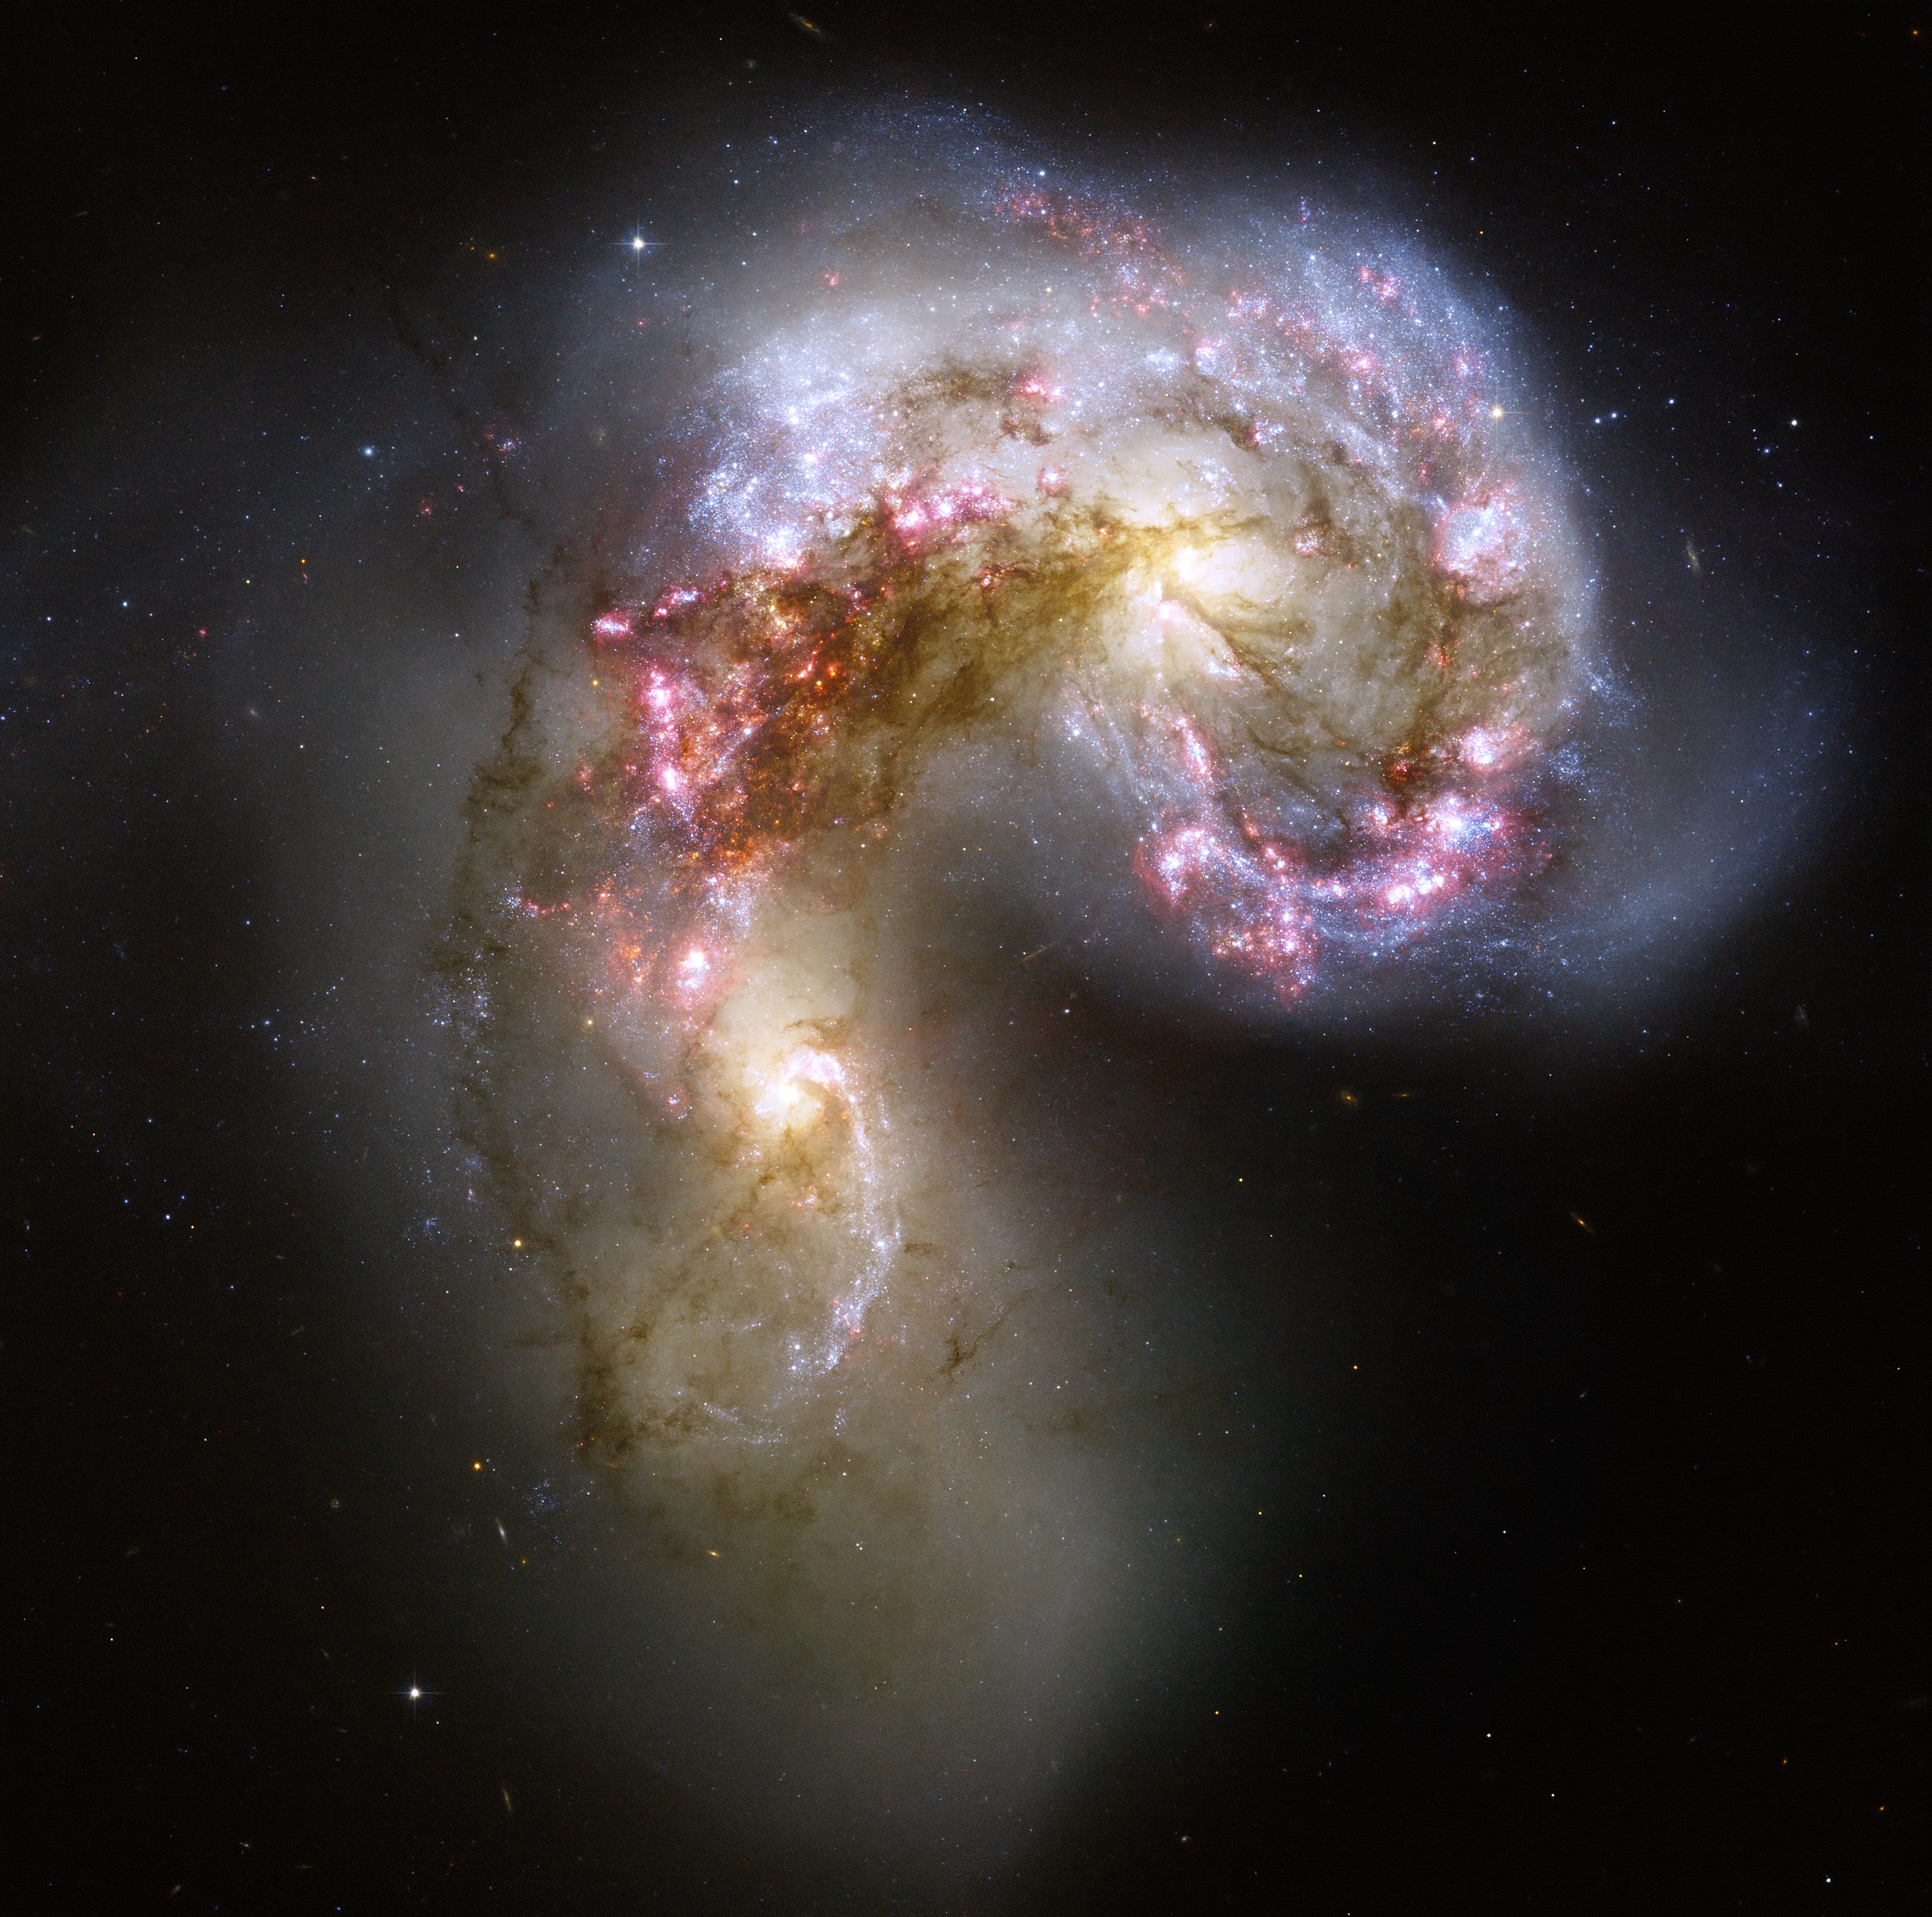 <span style="font-size:16px;position:relative;top:-50px">[NASA/ESA](https://commons.wikimedia.org/wiki/File:Antennae_galaxies_xl.jpg)</span>